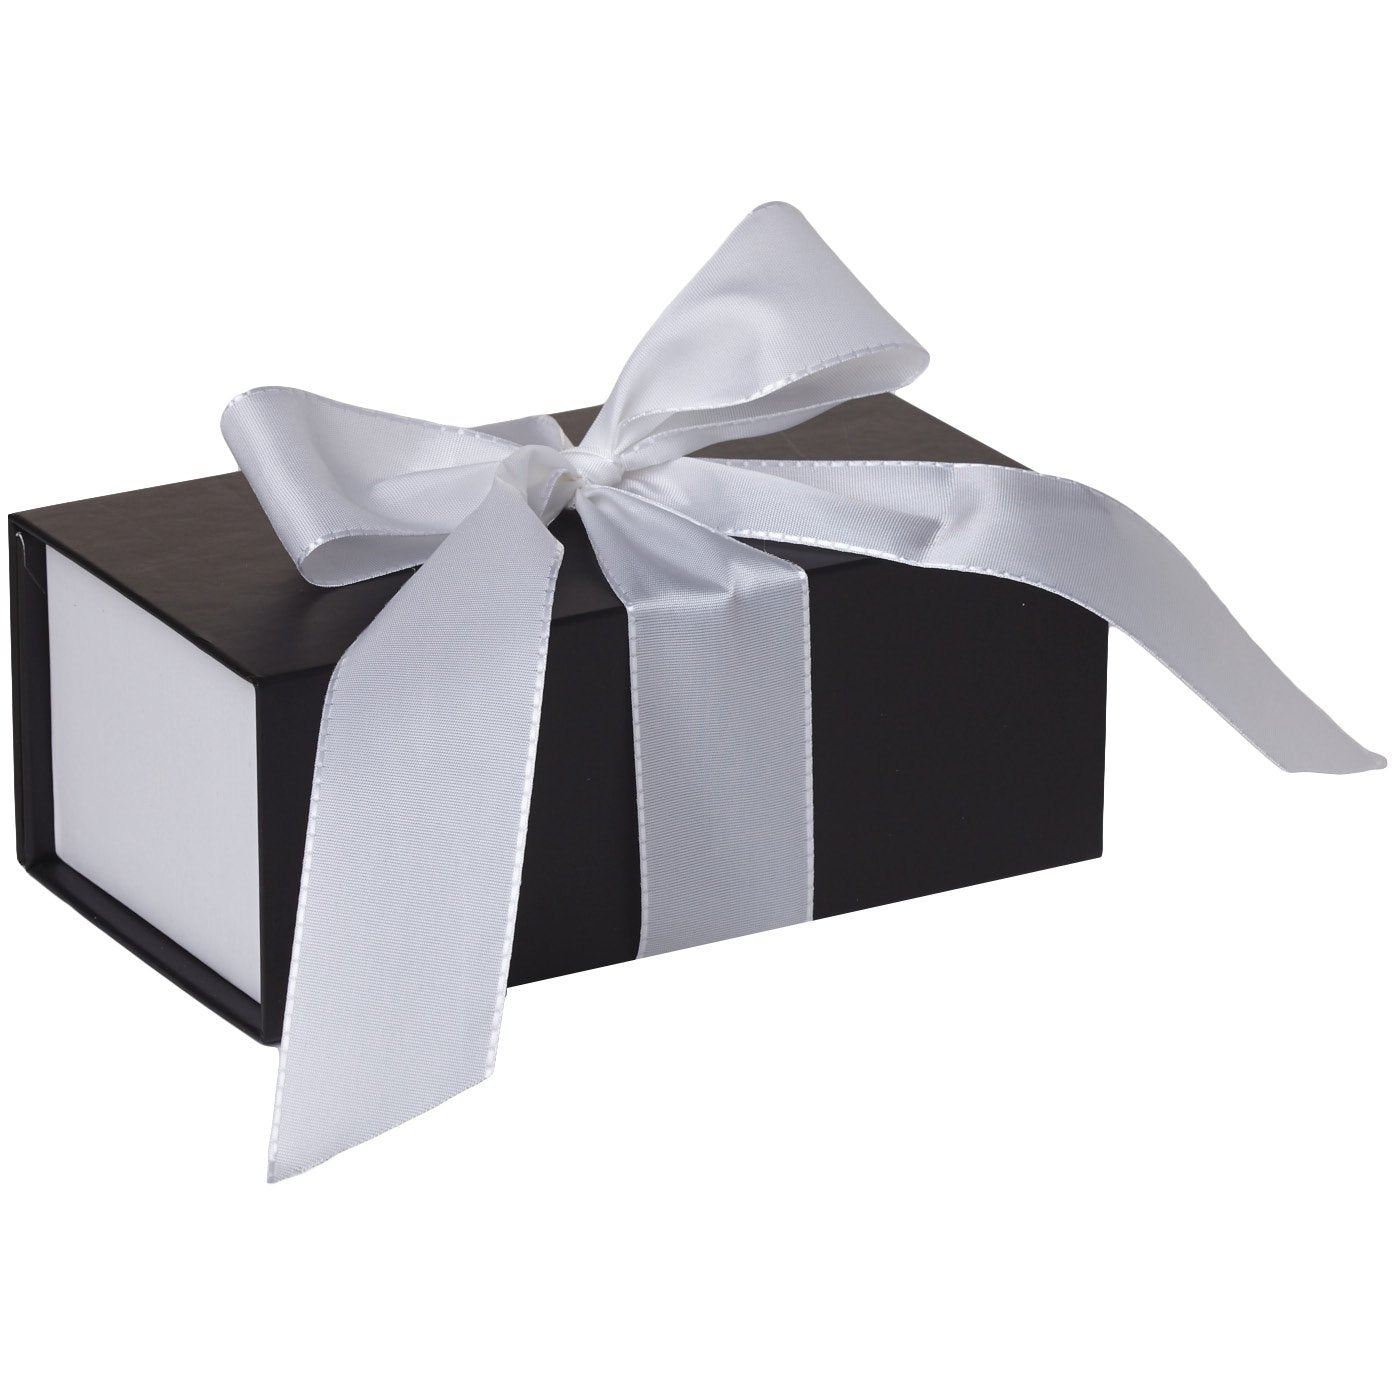 Jillson & Roberts Small Gift Box with Ribbon Tie, Sophisticate Black Matte (12 Pcs)